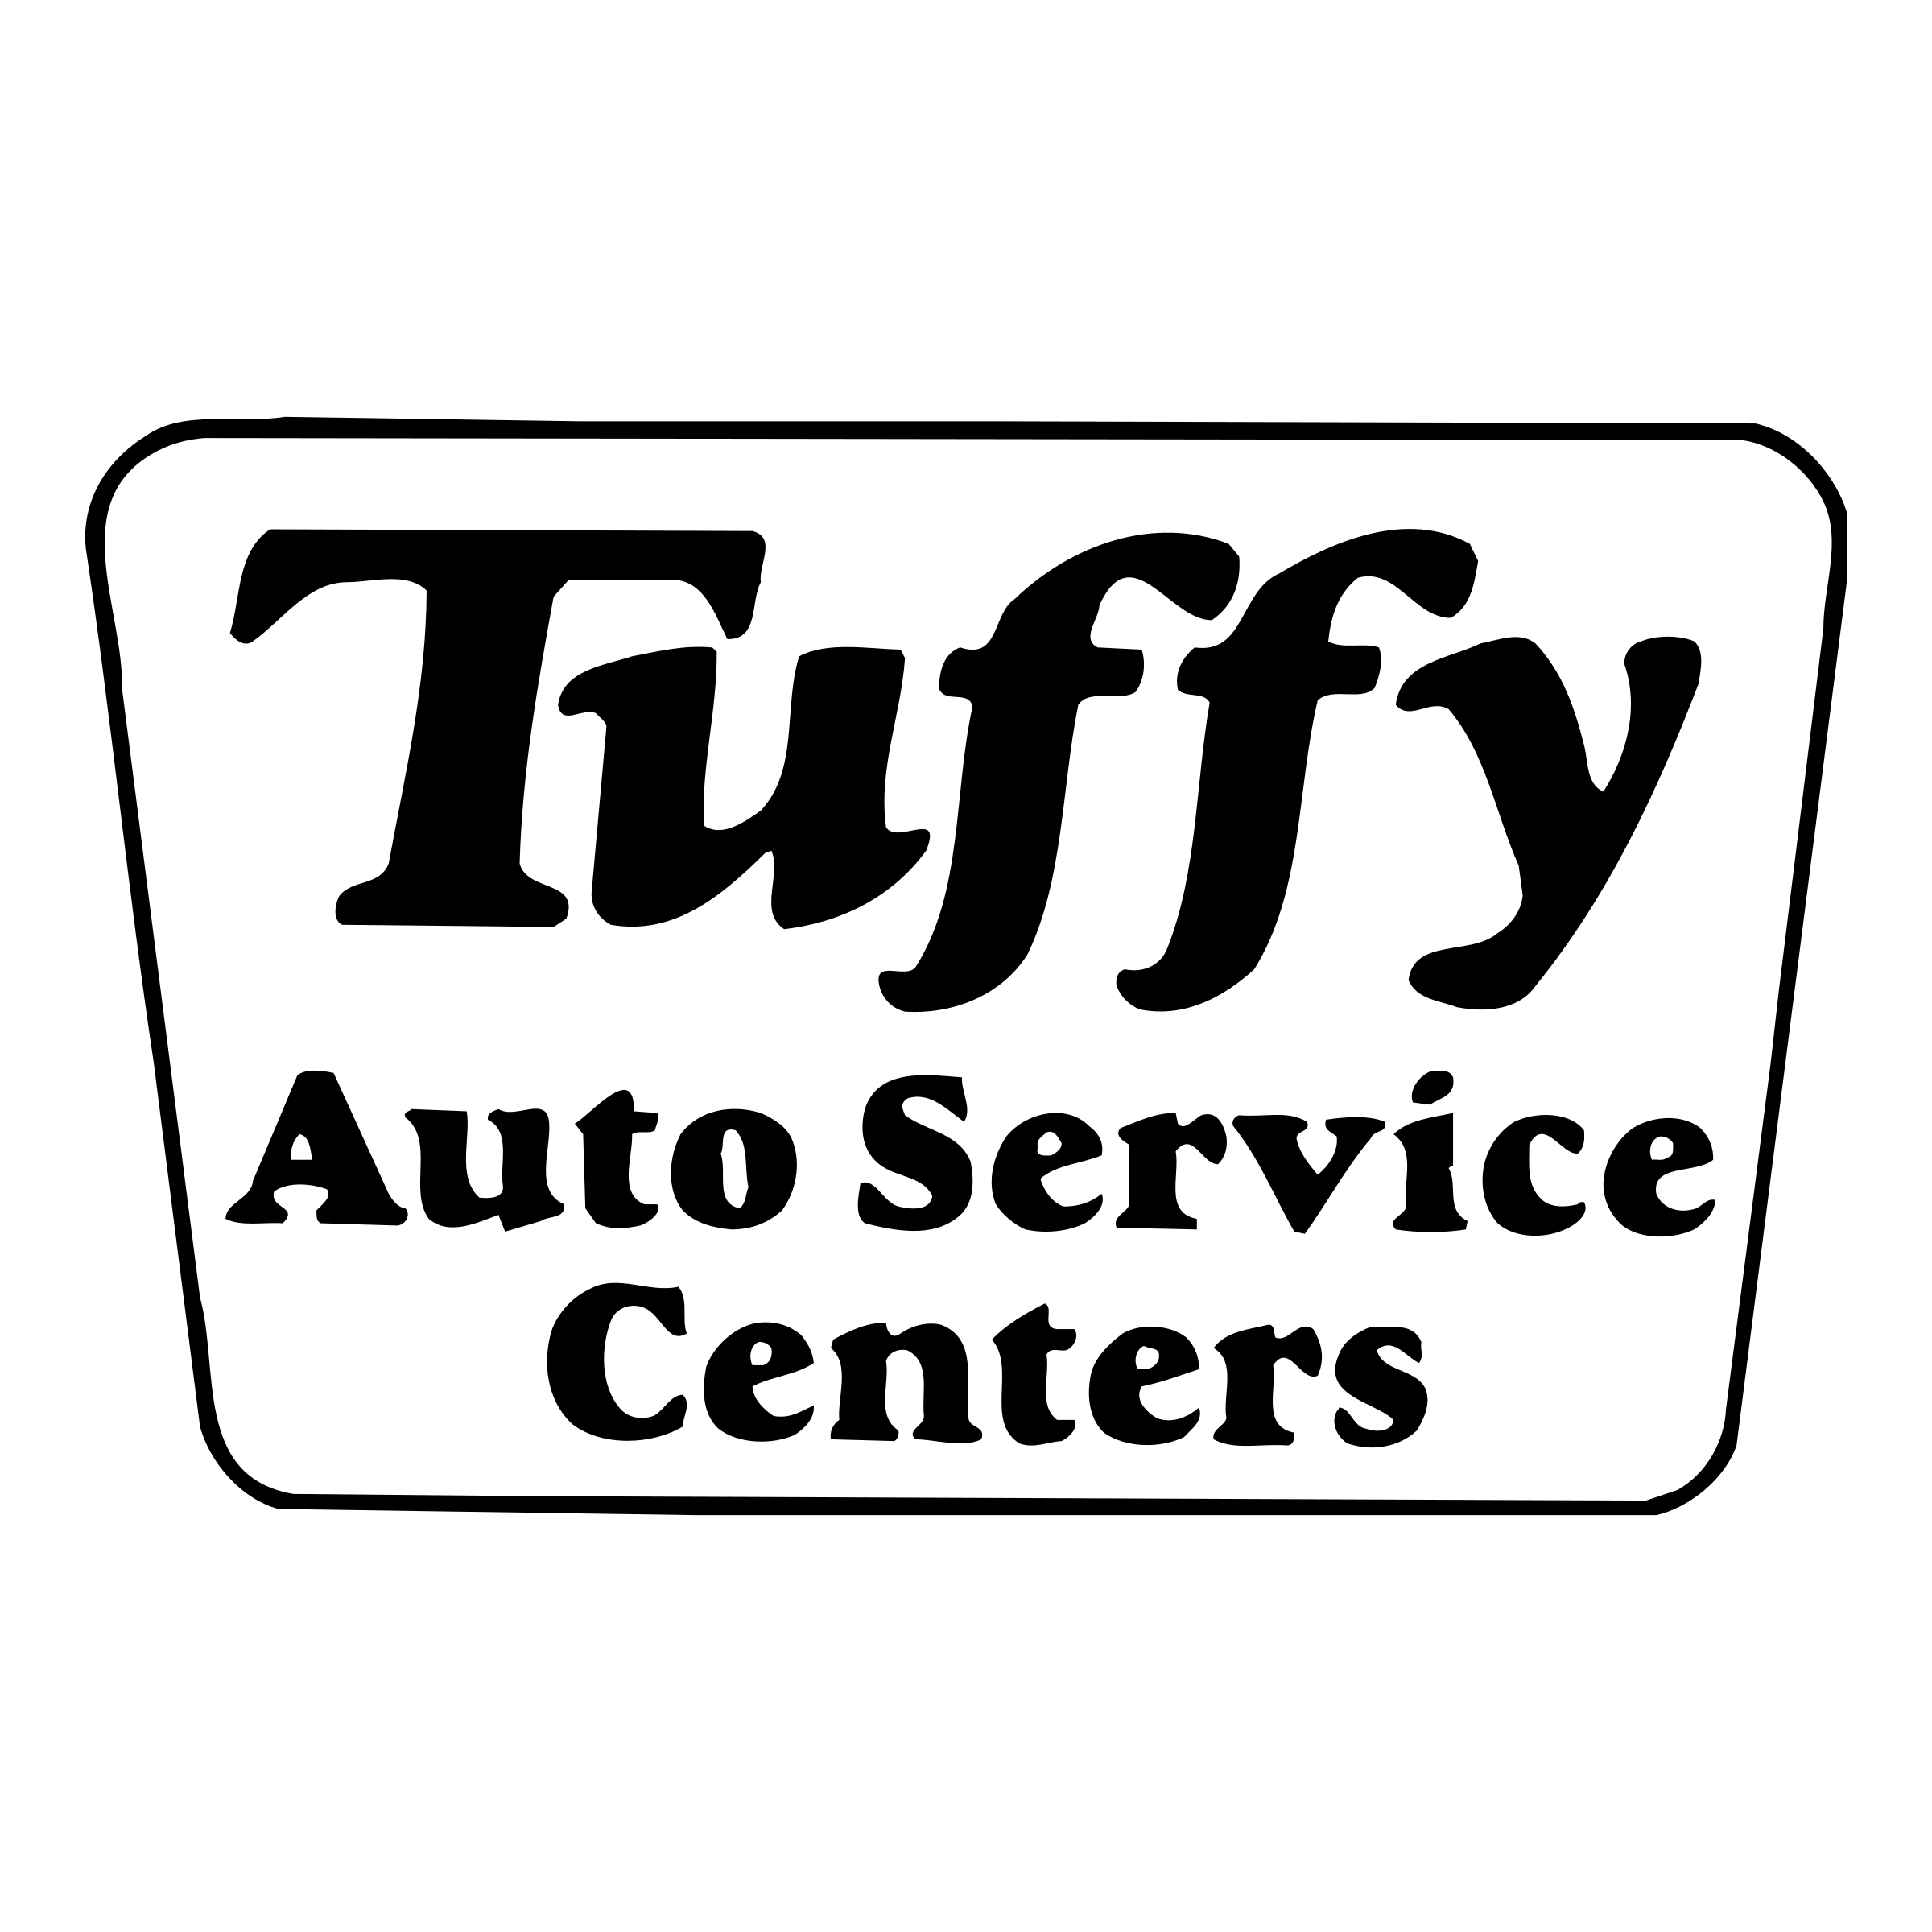 Tuffy Logo - Tuffy Logo PNG Transparent & SVG Vector